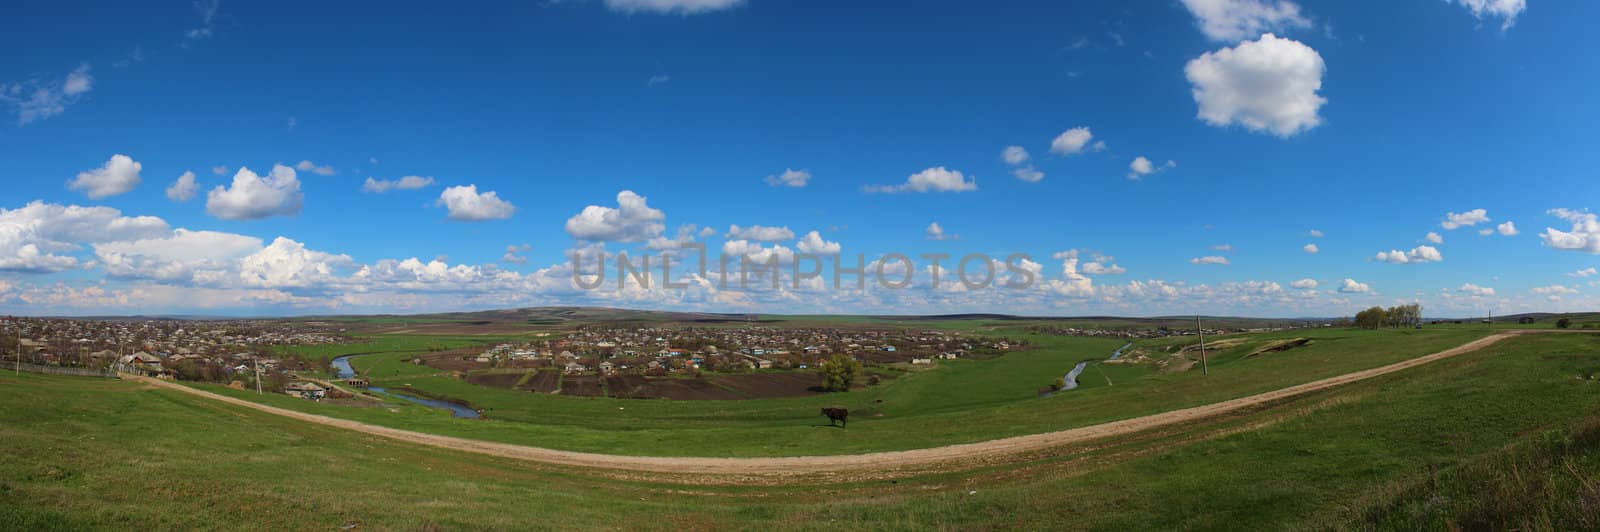 Village panorama by catalinr